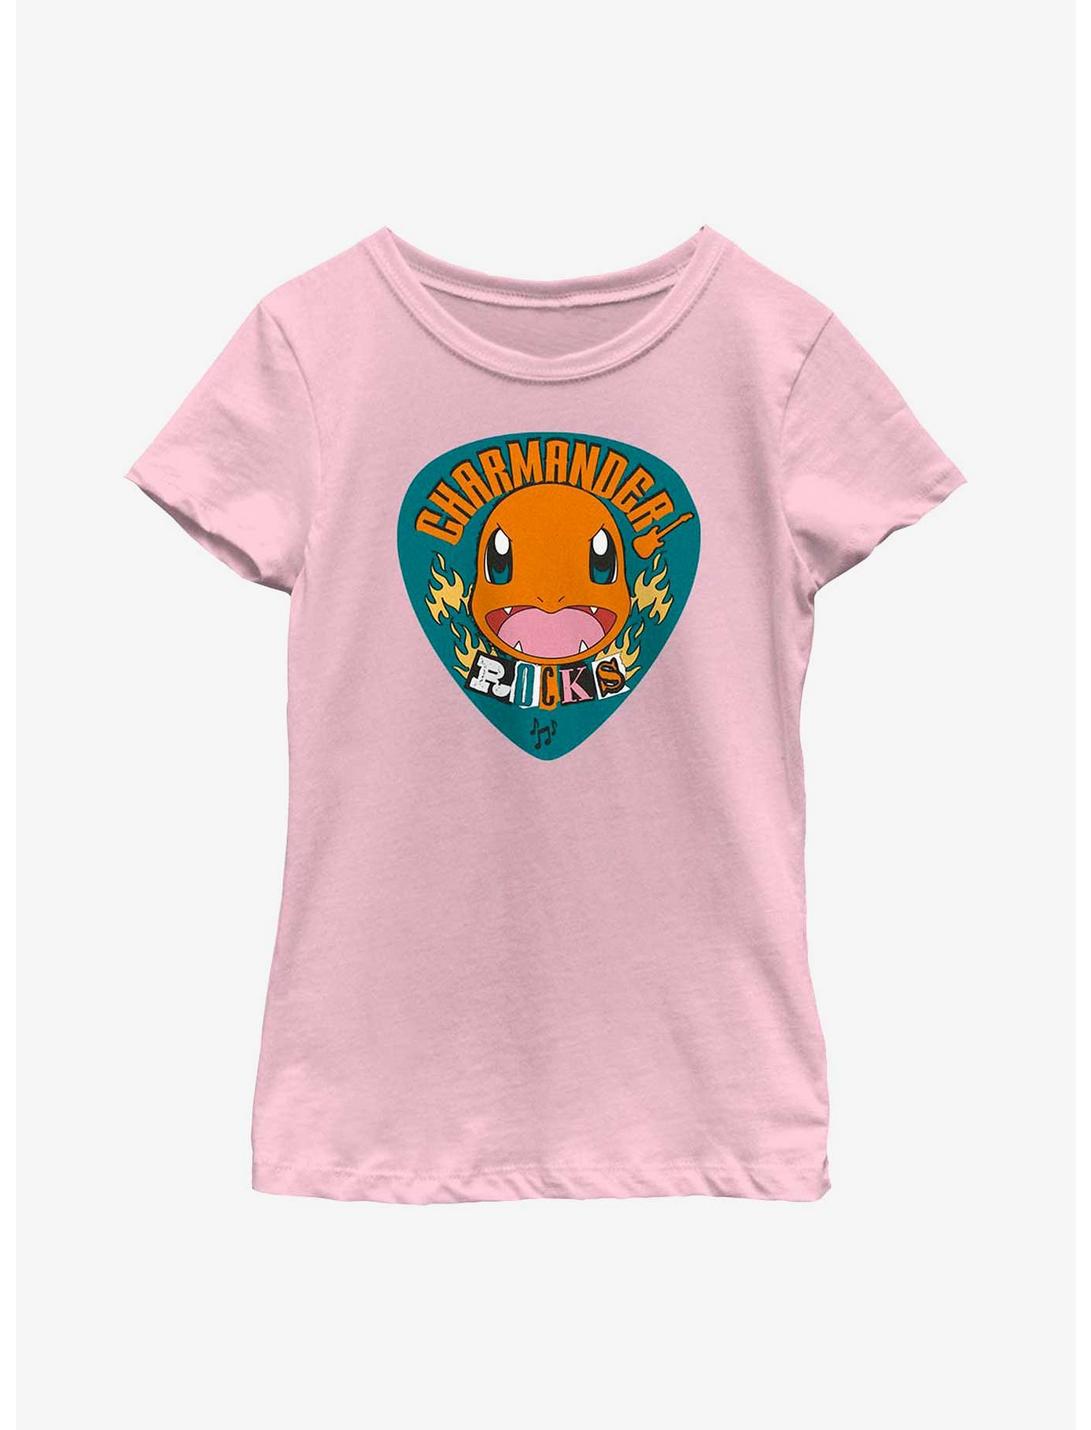 Pokemon Charmander Rocks Youth Girls T-Shirt, PINK, hi-res